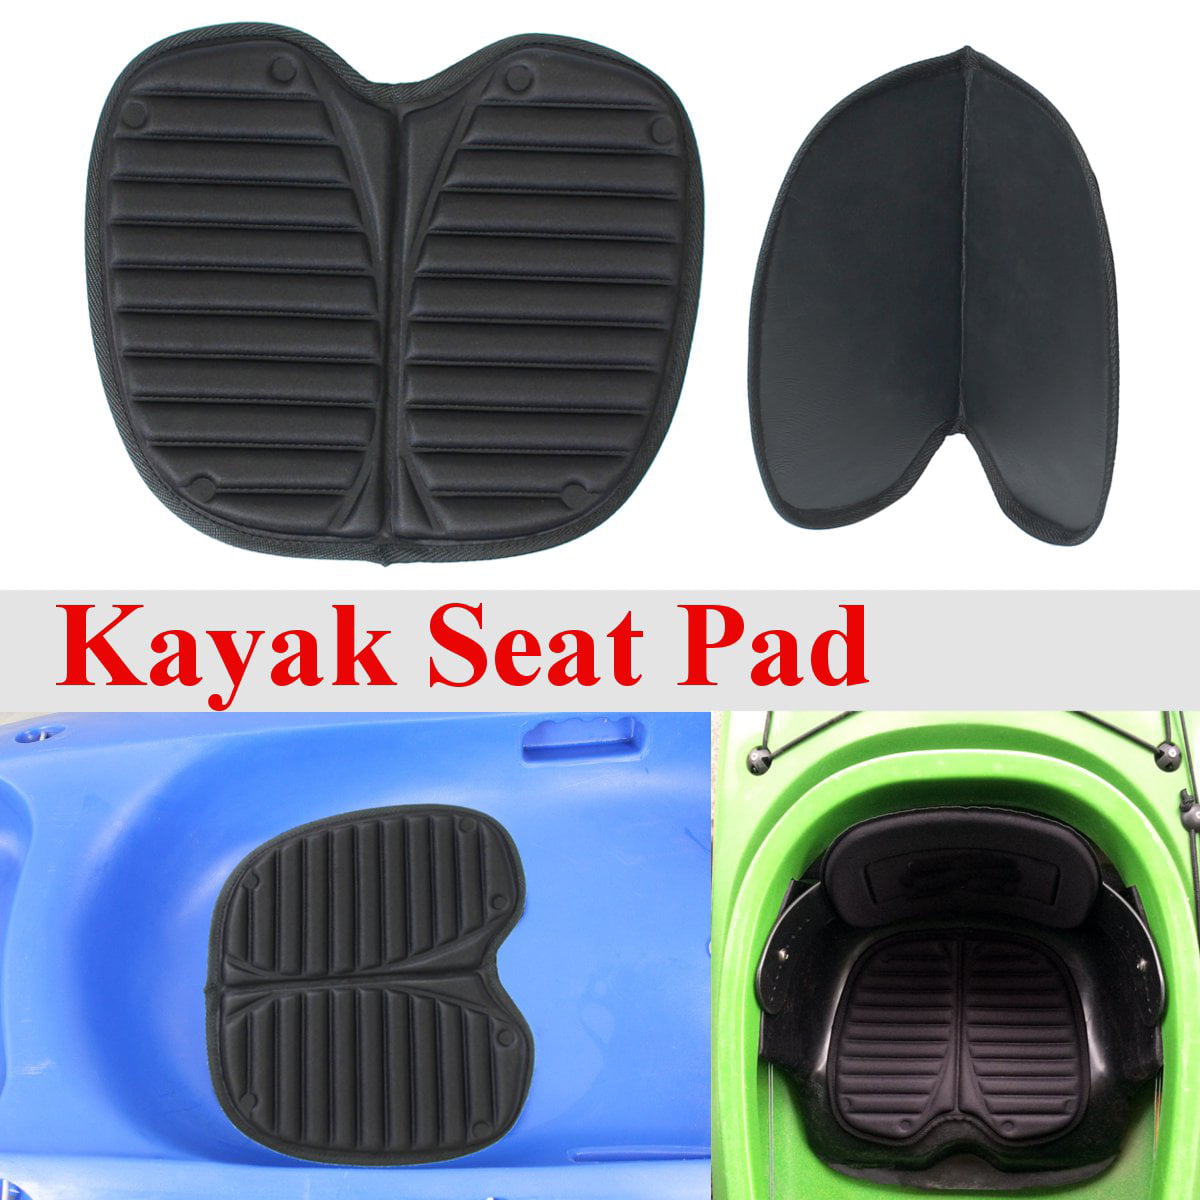 Details about   Kayak Back Seat Cushion Seat Pad Lightweight Eva Paddling Sit-on Top Soft Mold 